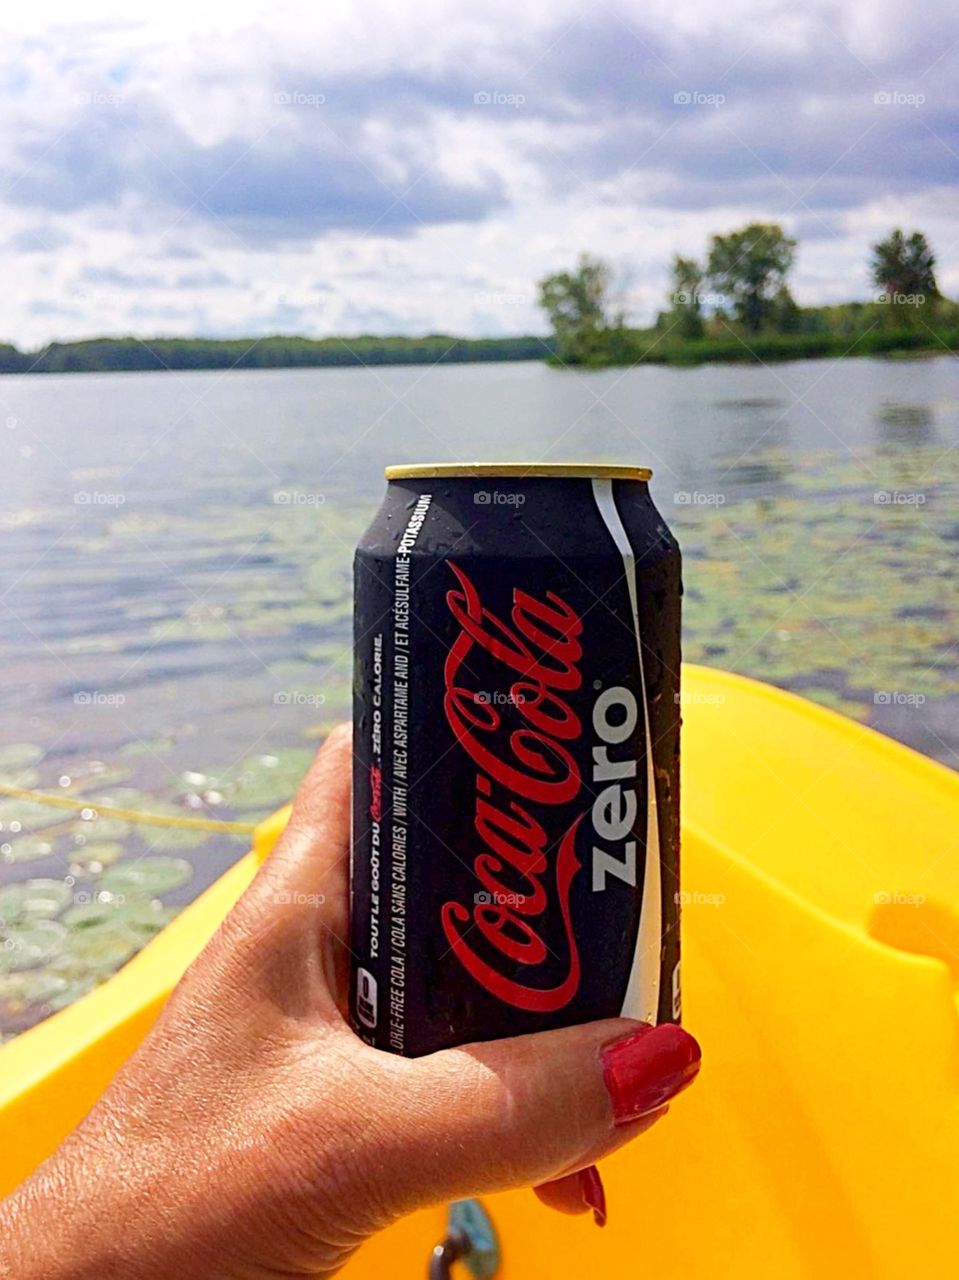 Enjoying Coca Cola on the water
